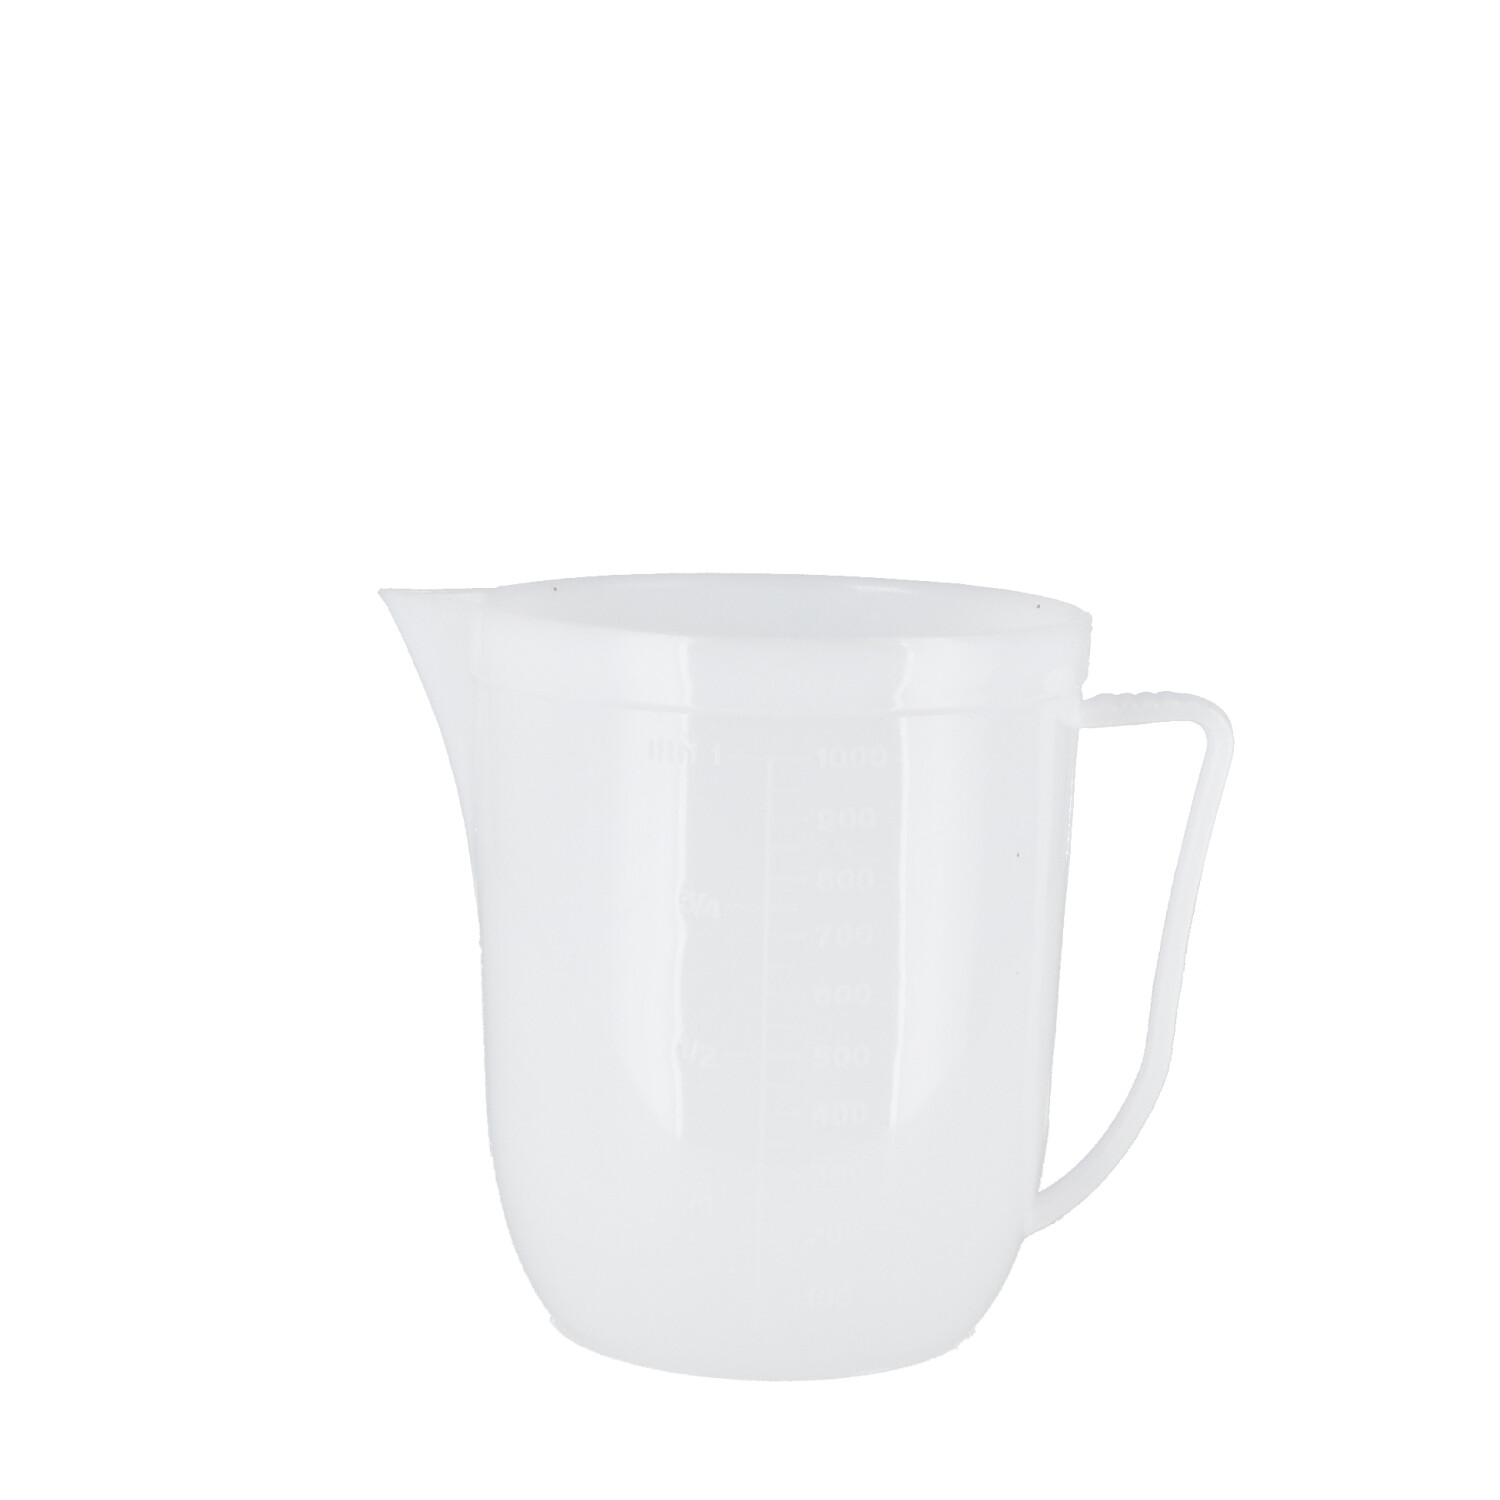 Measuring Cup White Plastic - 1 litre